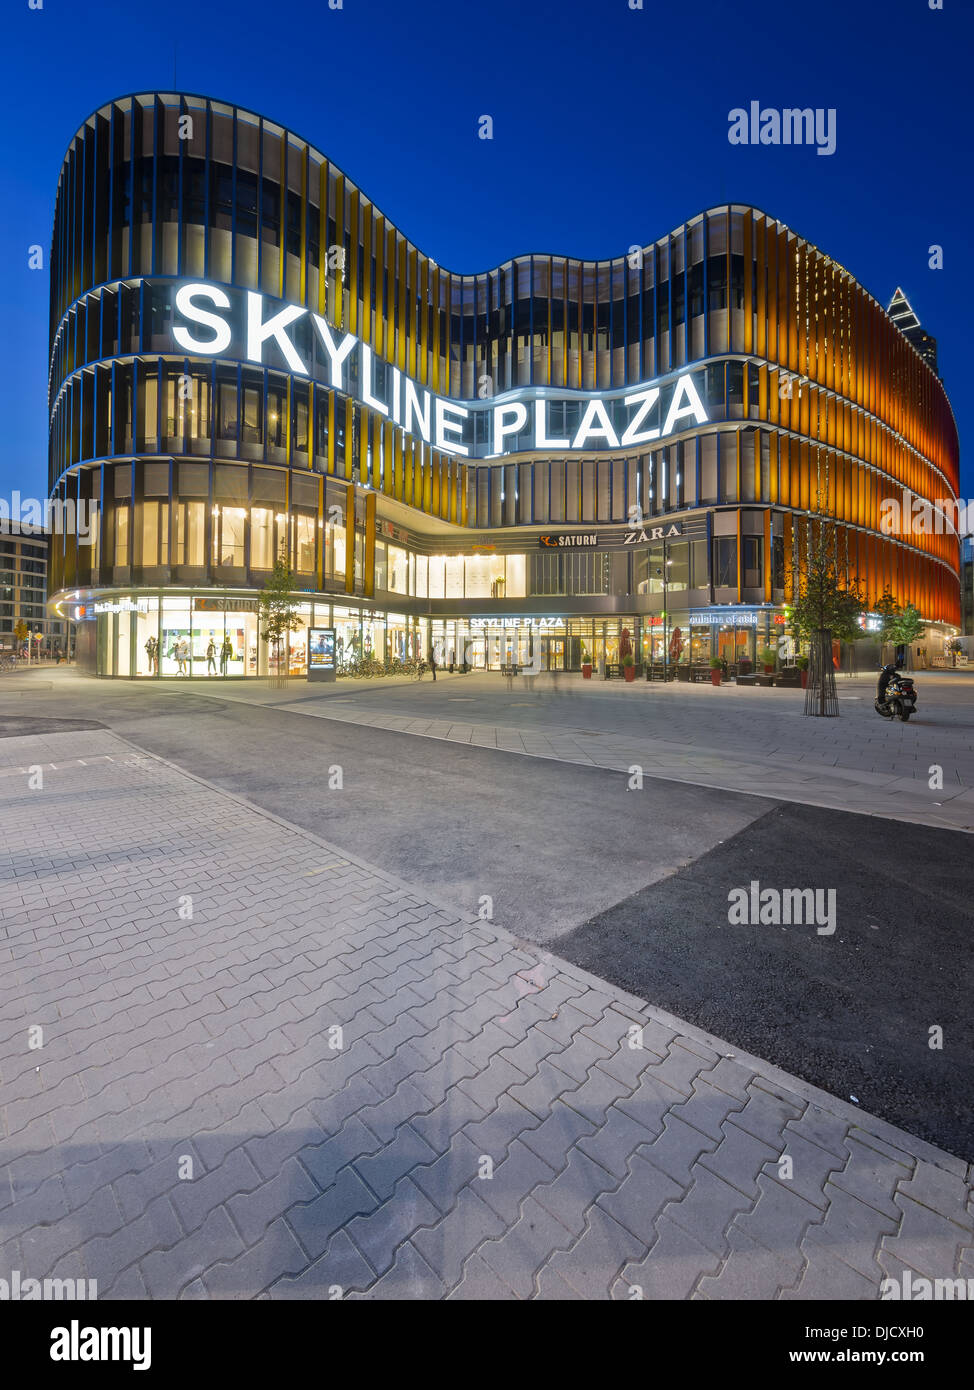 Germany, Hesse, Frankfurt, European Quarter, Skyline Plaza shopping center  in the evening Stock Photo - Alamy